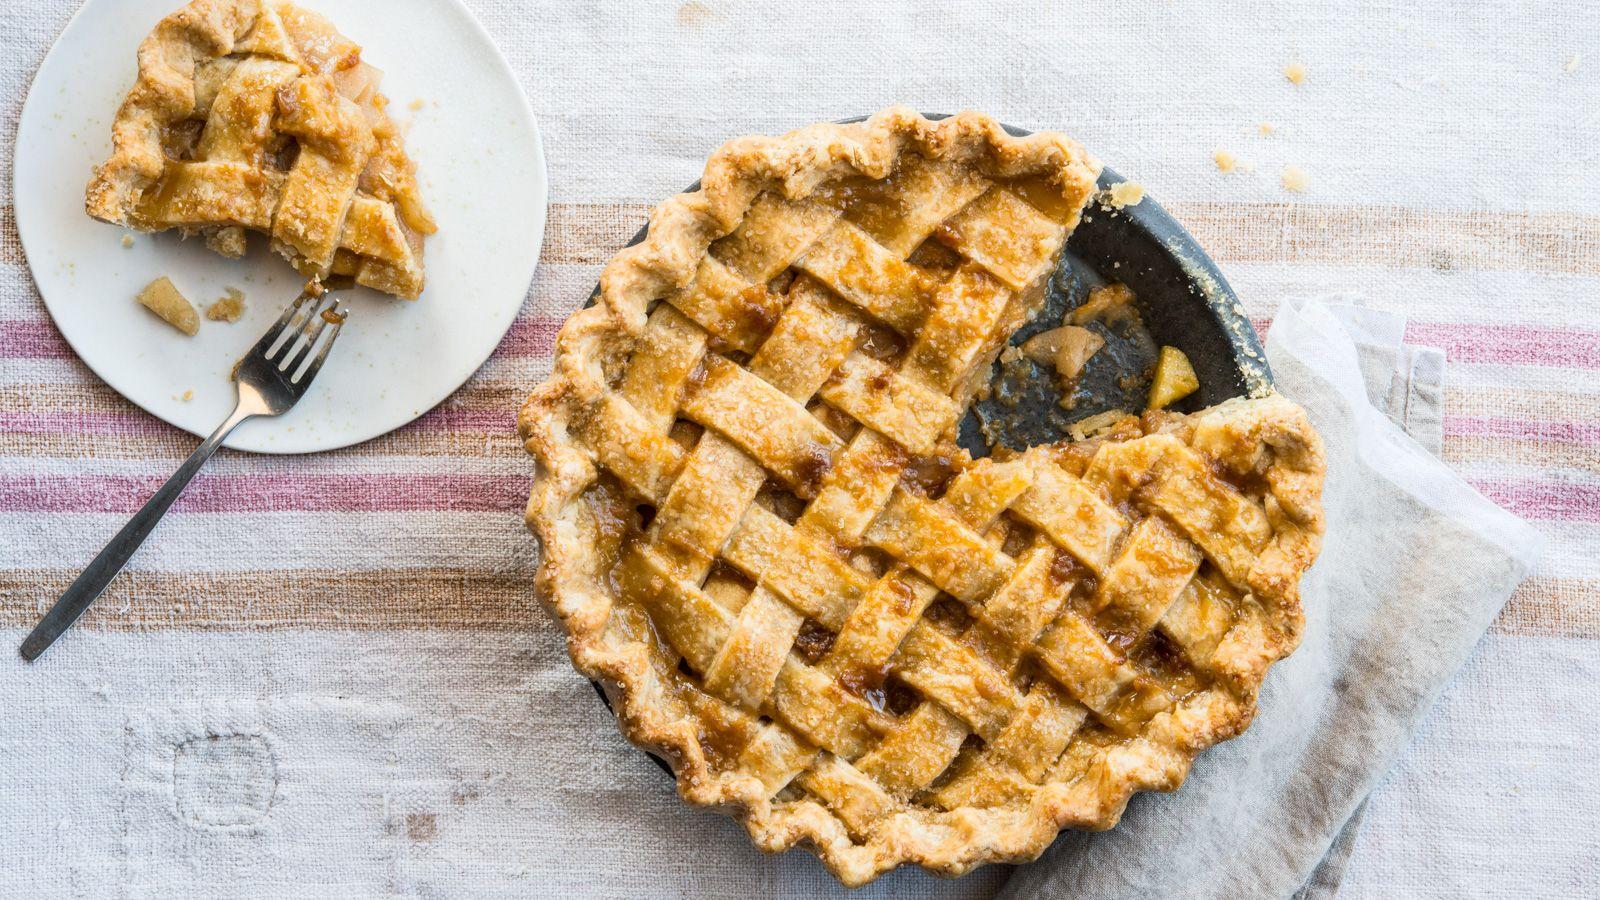 Old Fashioned Brown Sugar And Cinnamon Apple Pie Recipe